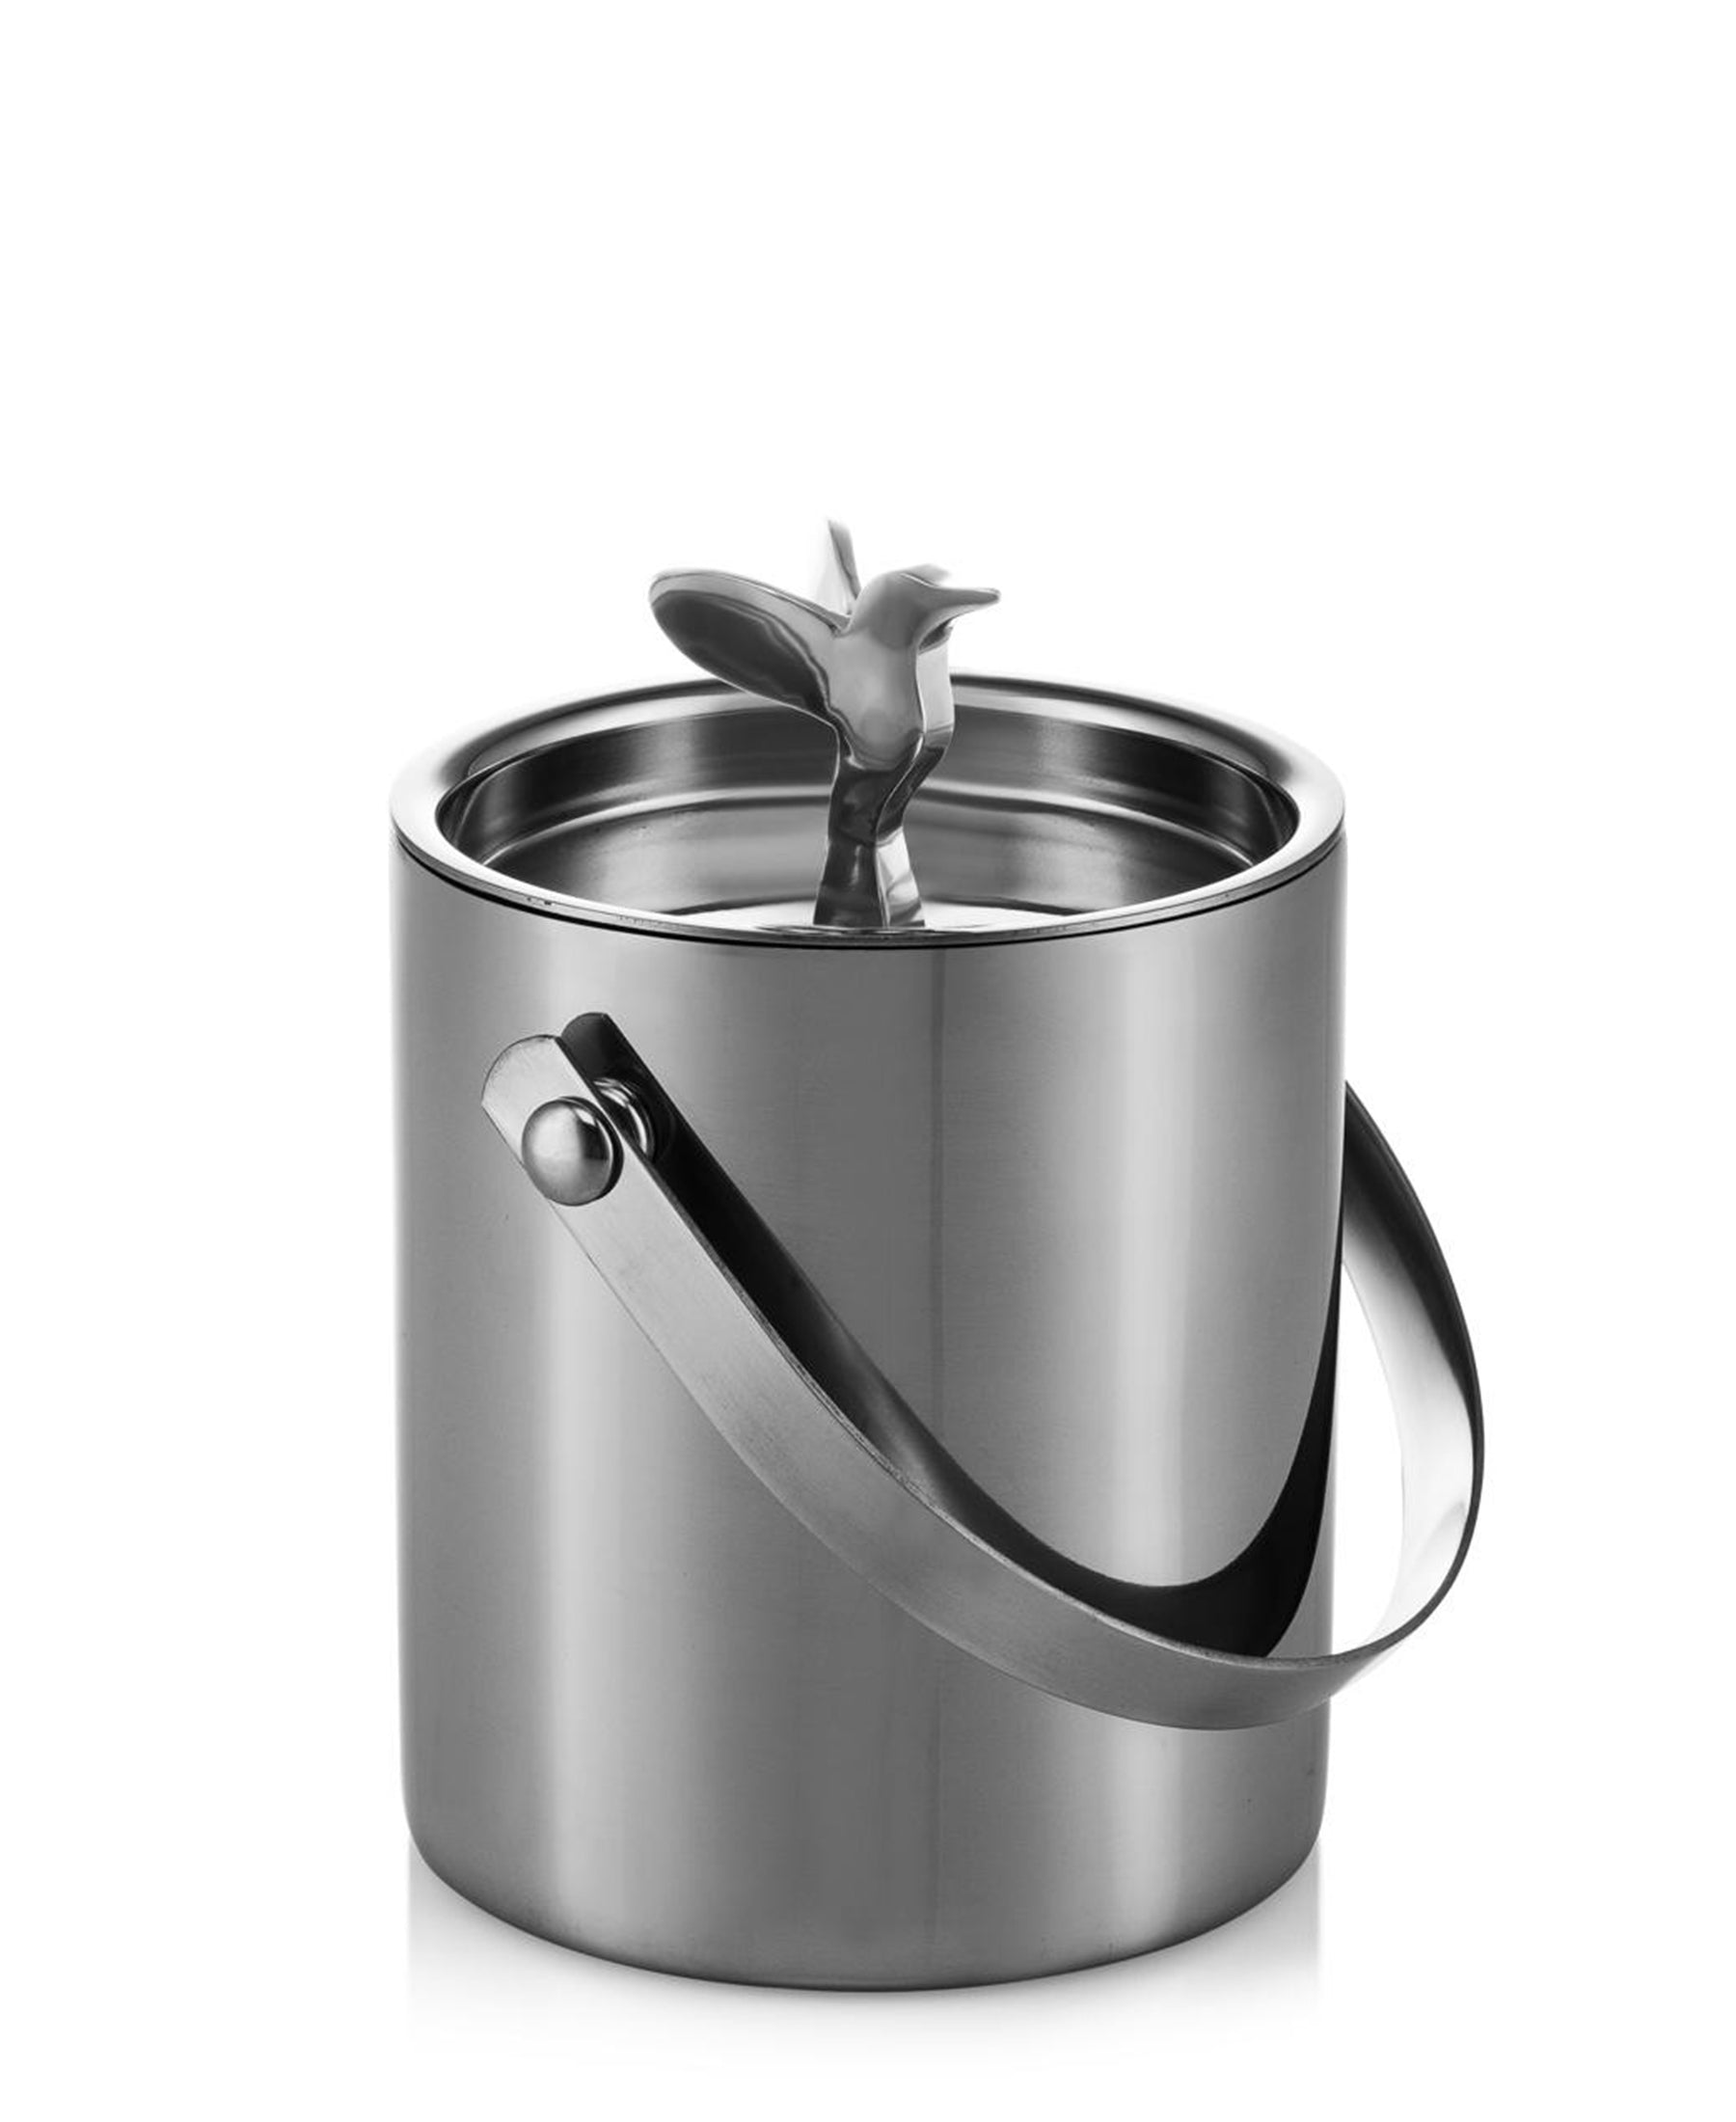 Carrol Boyes Ice Bucket With Handle Humming Bird - Silver